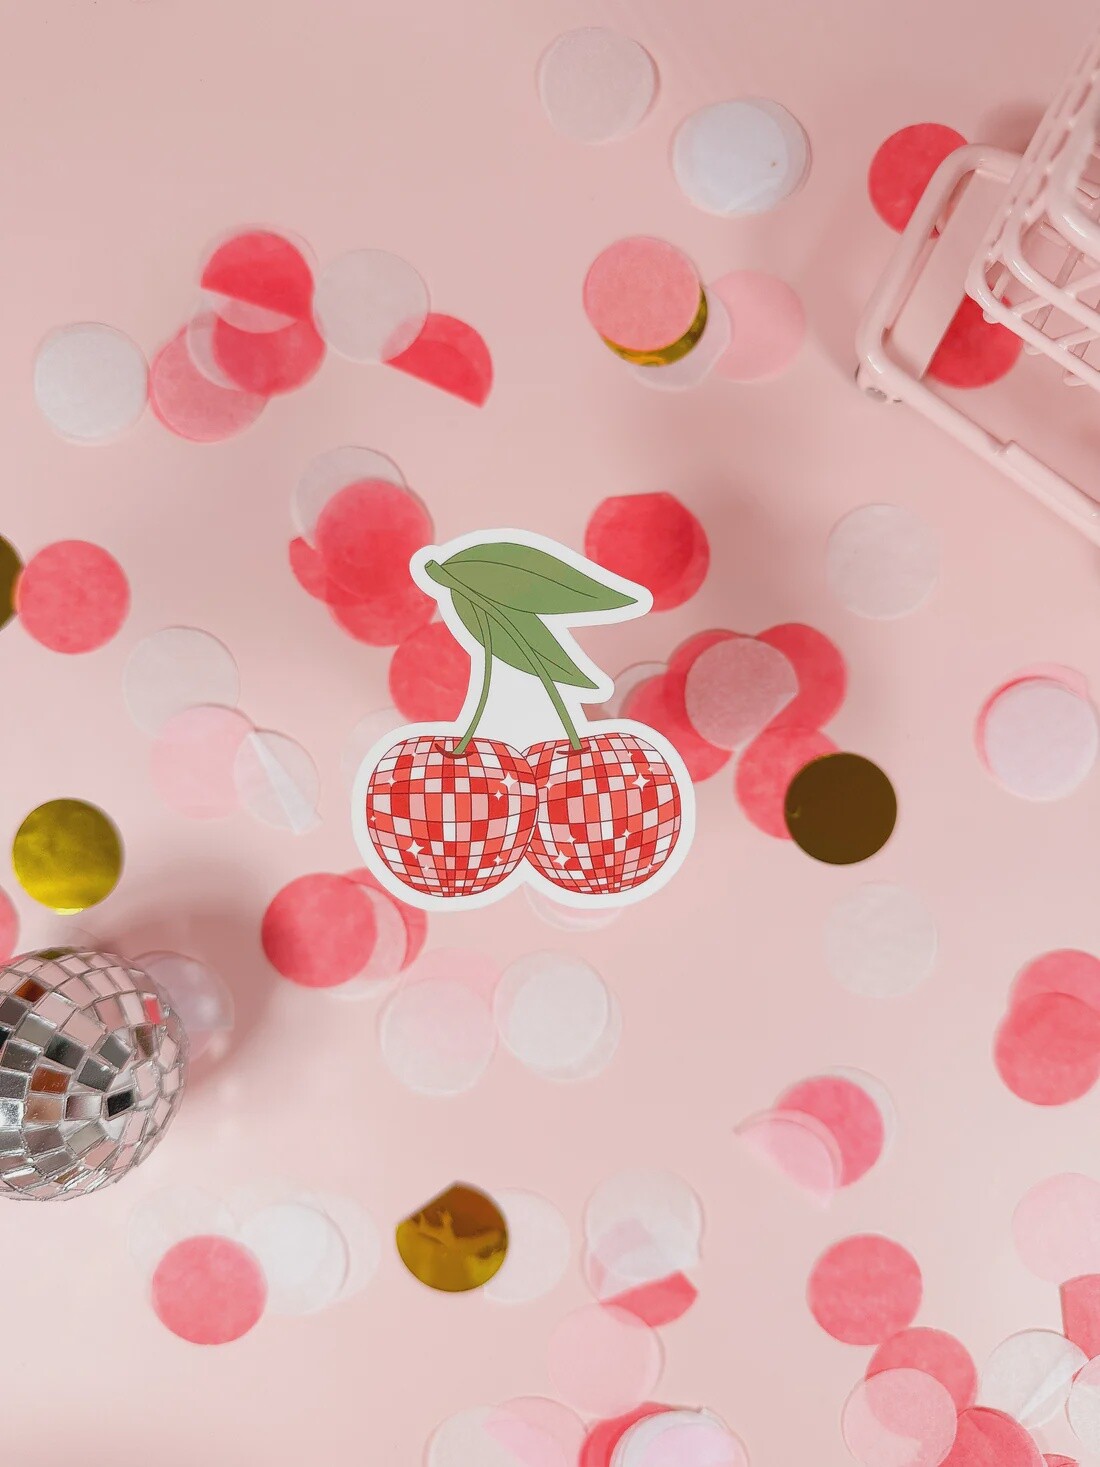 Disco Cherries Vinyl Sticker